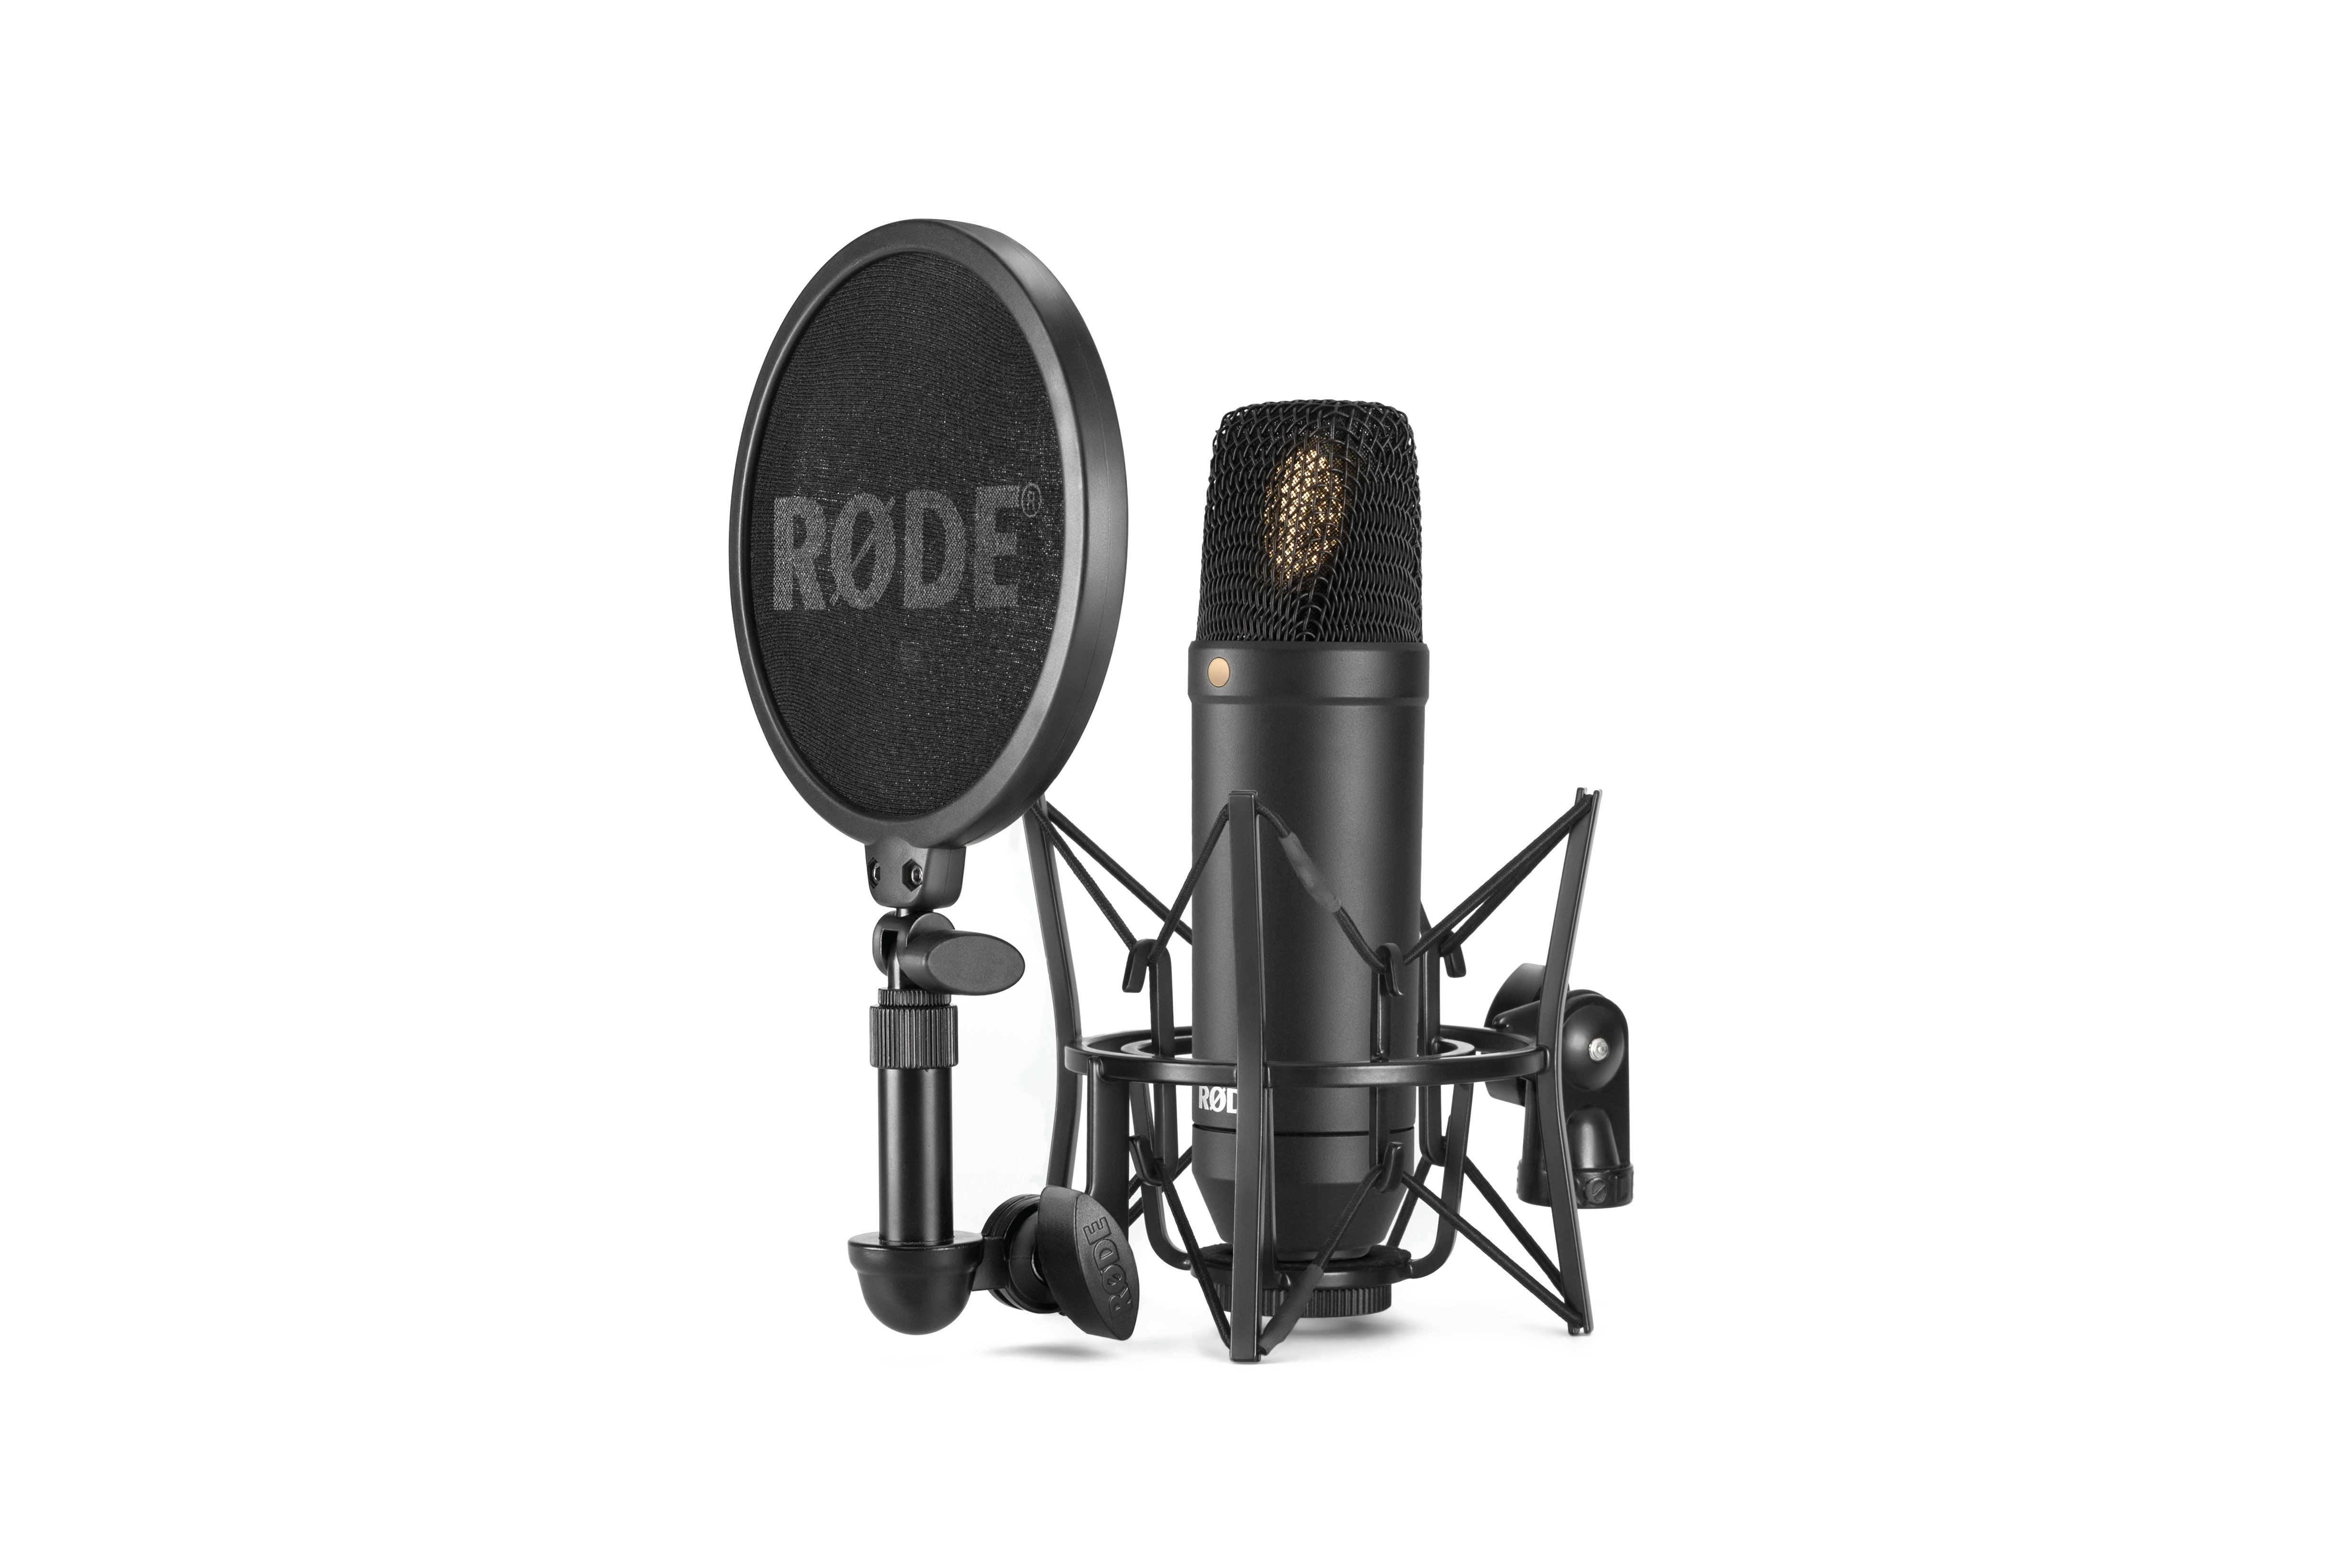 Bedste Mikrofon - 6 Mikrofoner I Studiekvalitet